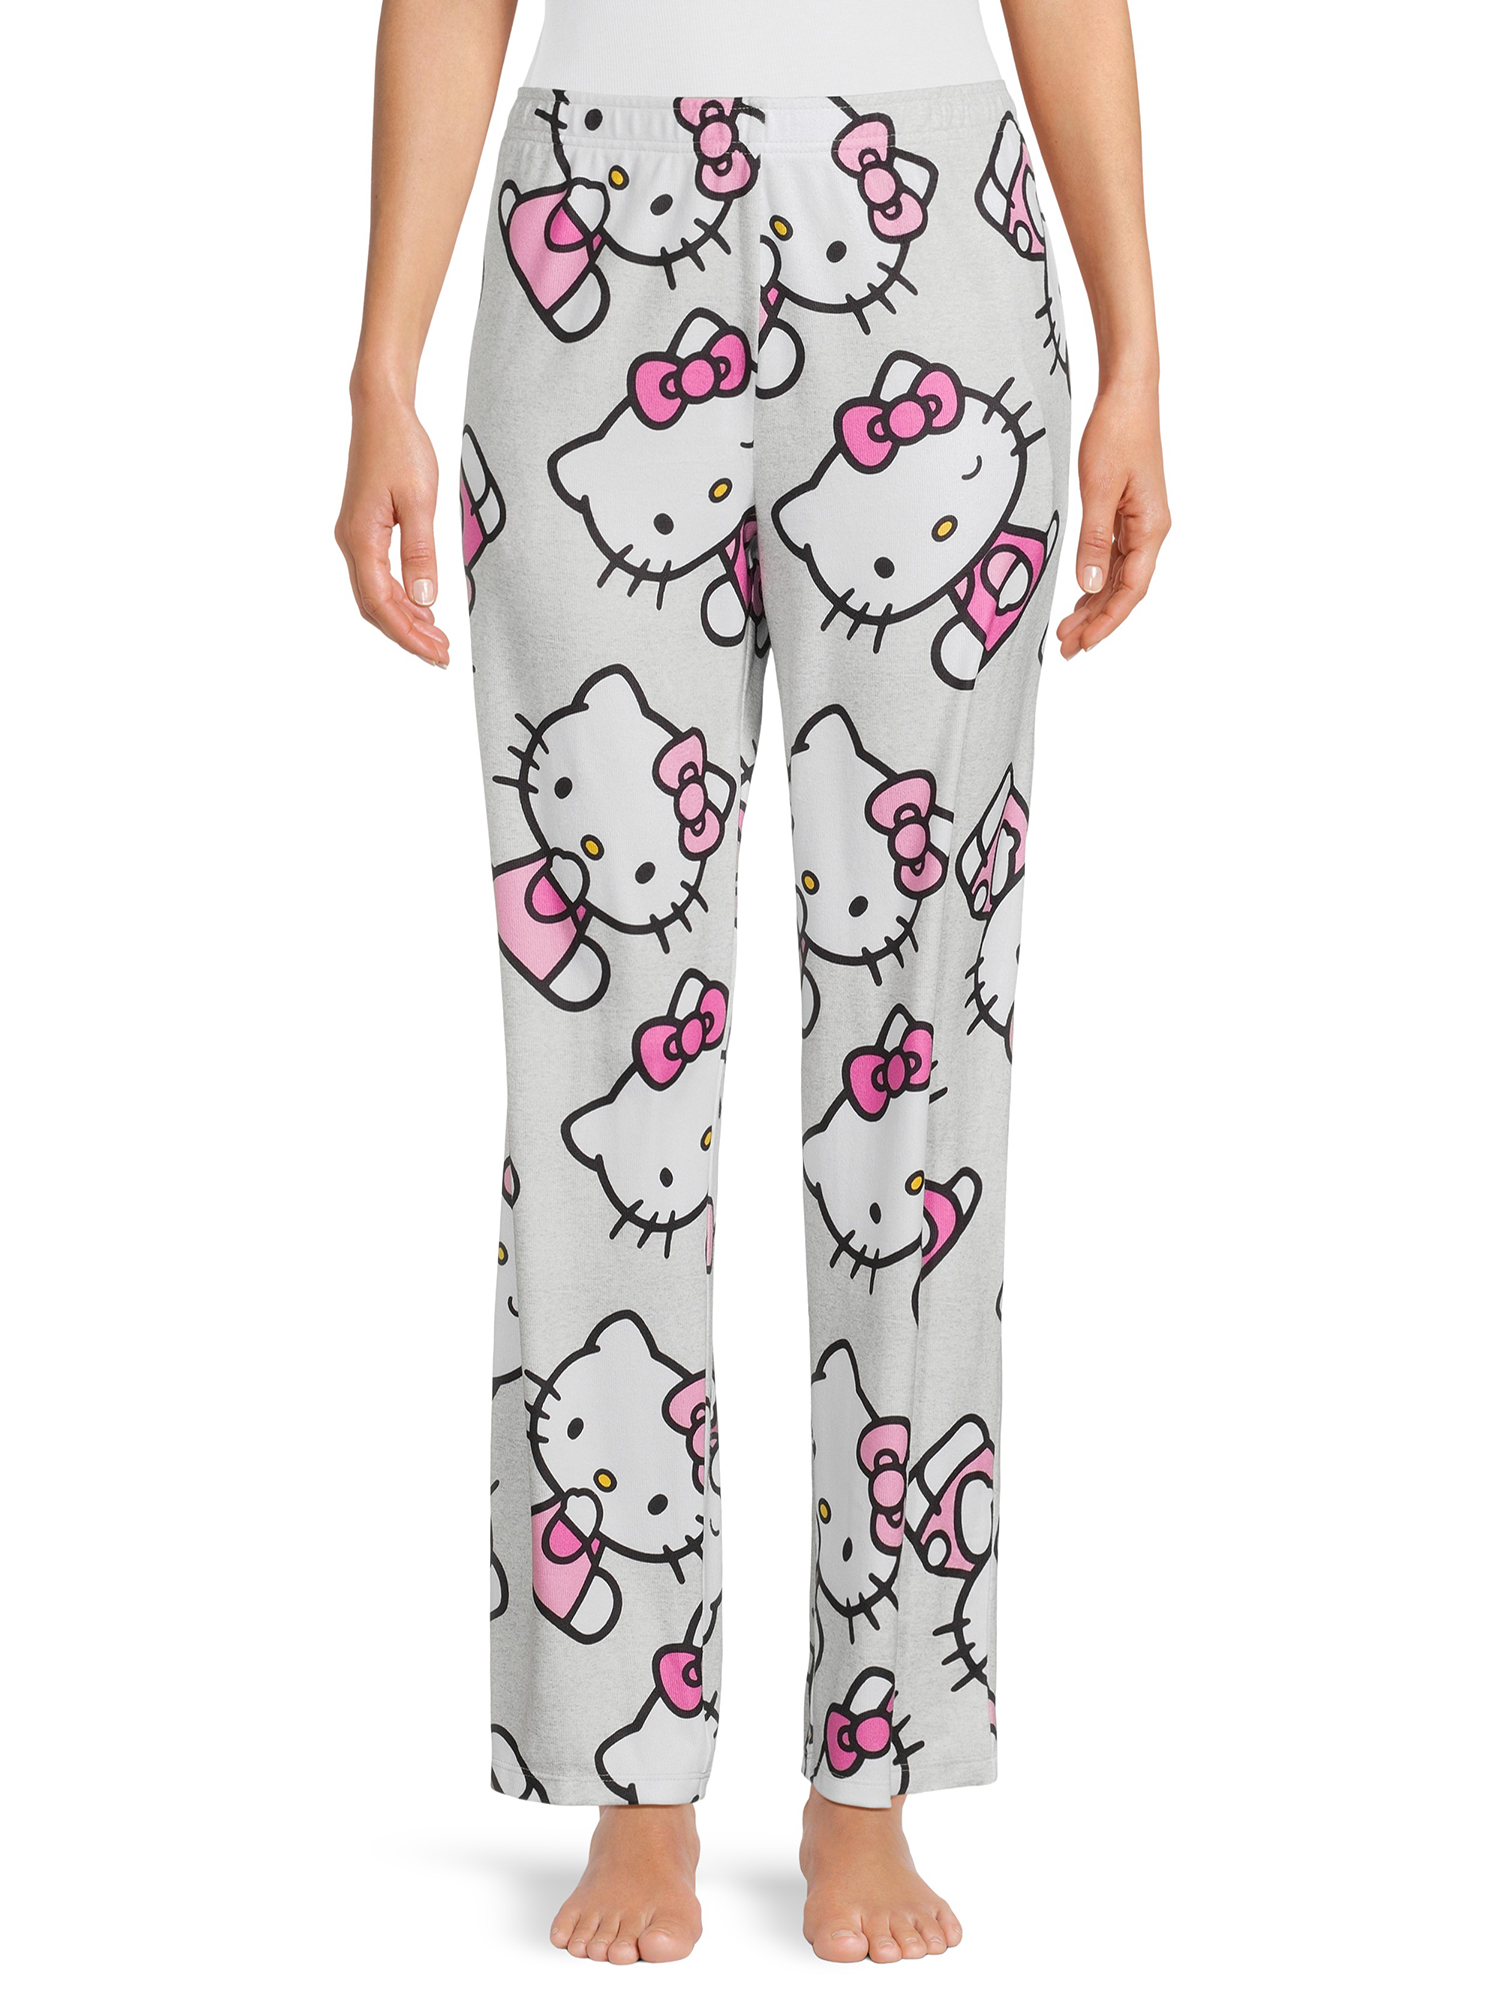 Hello Kitty Print Lounge Pants, Size XS-3X - image 1 of 5